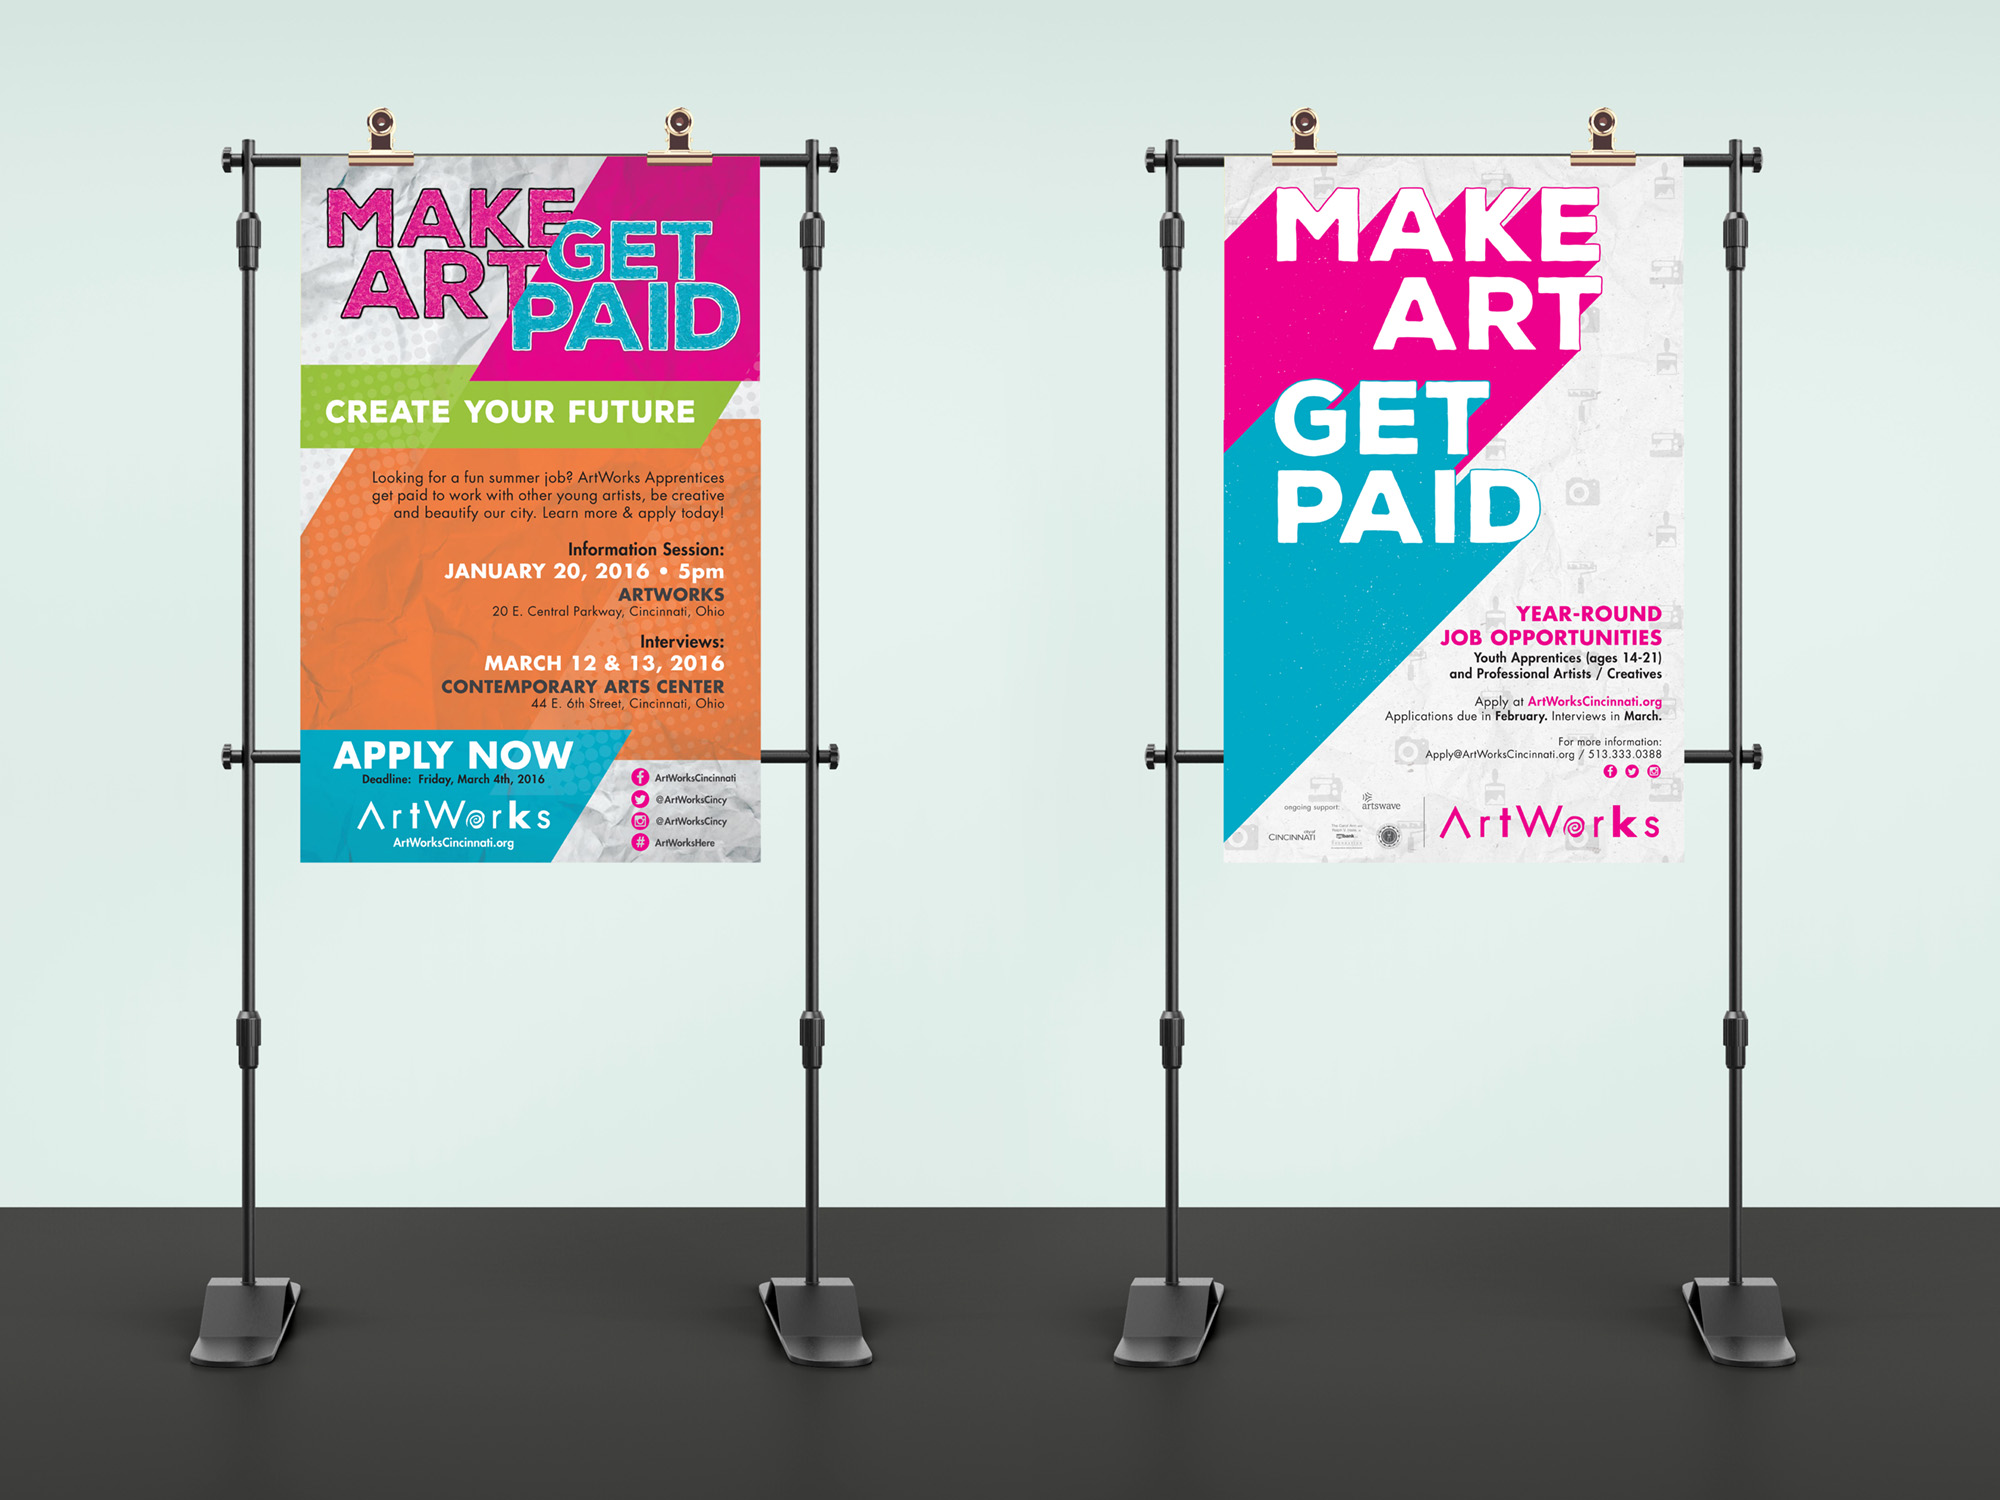 ArtWorks Make Art Get Paid